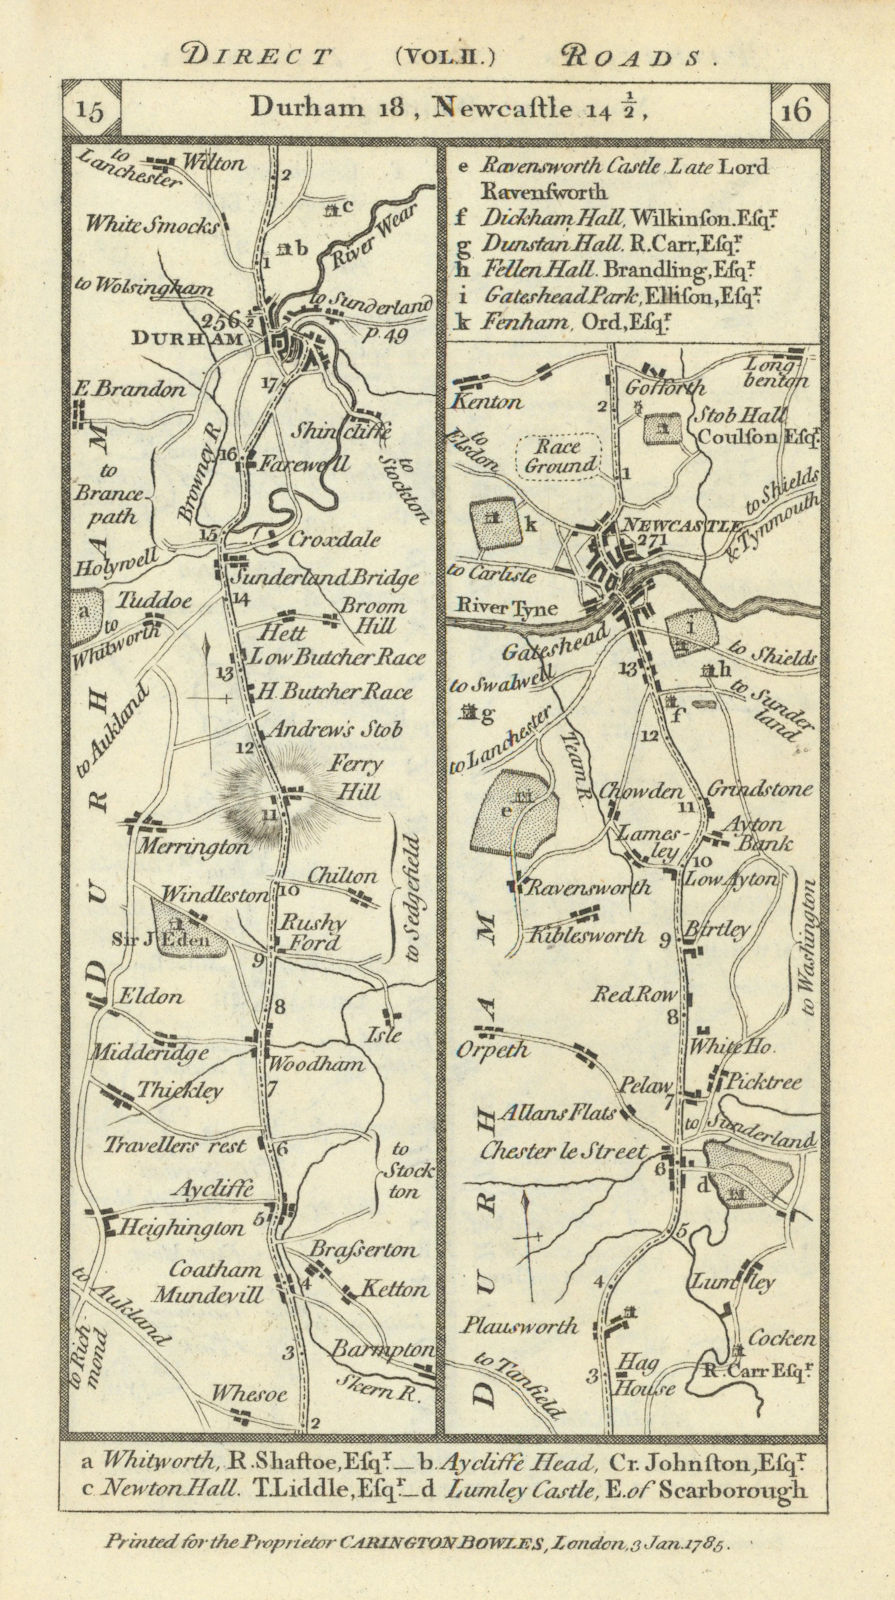 Durham-Chester/Street-Gateshead-Newcastle/Tyne road strip map PATERSON 1785